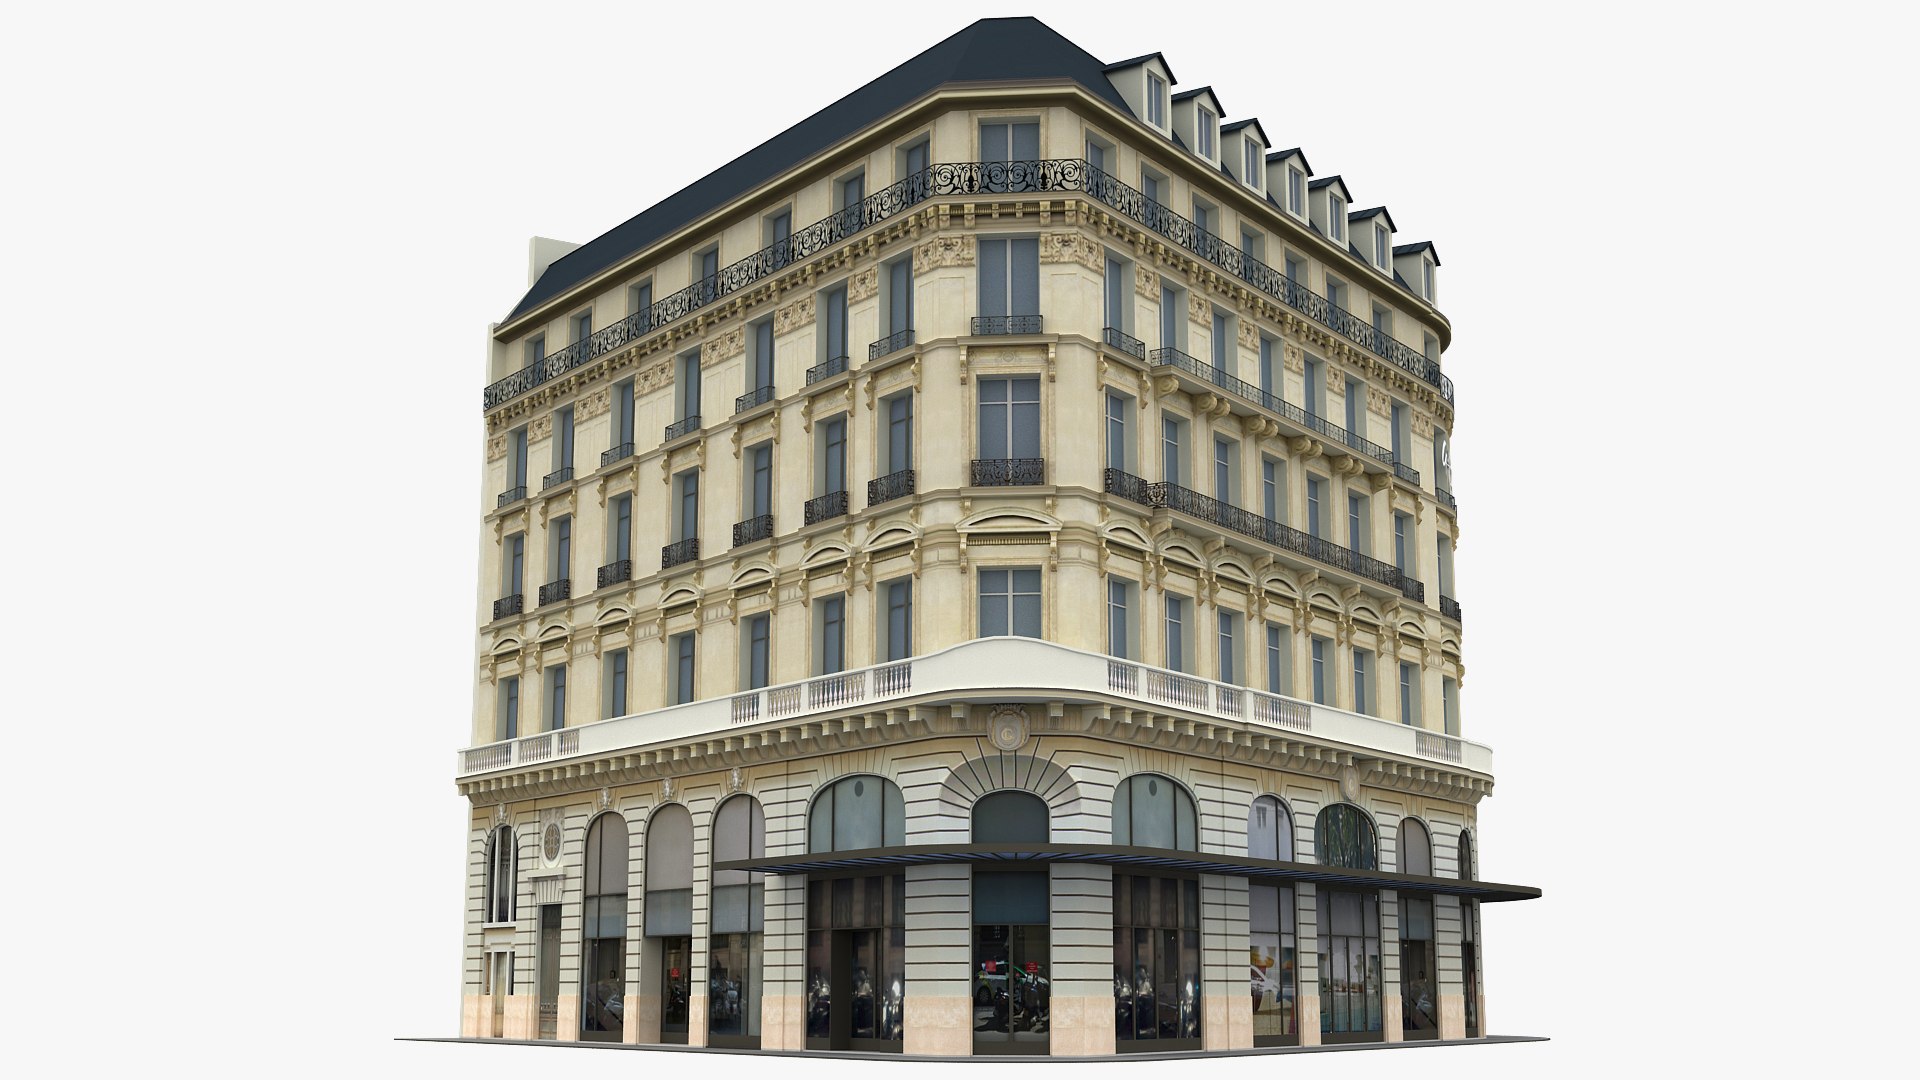 Boulevard Haussman Paris Building Galeries